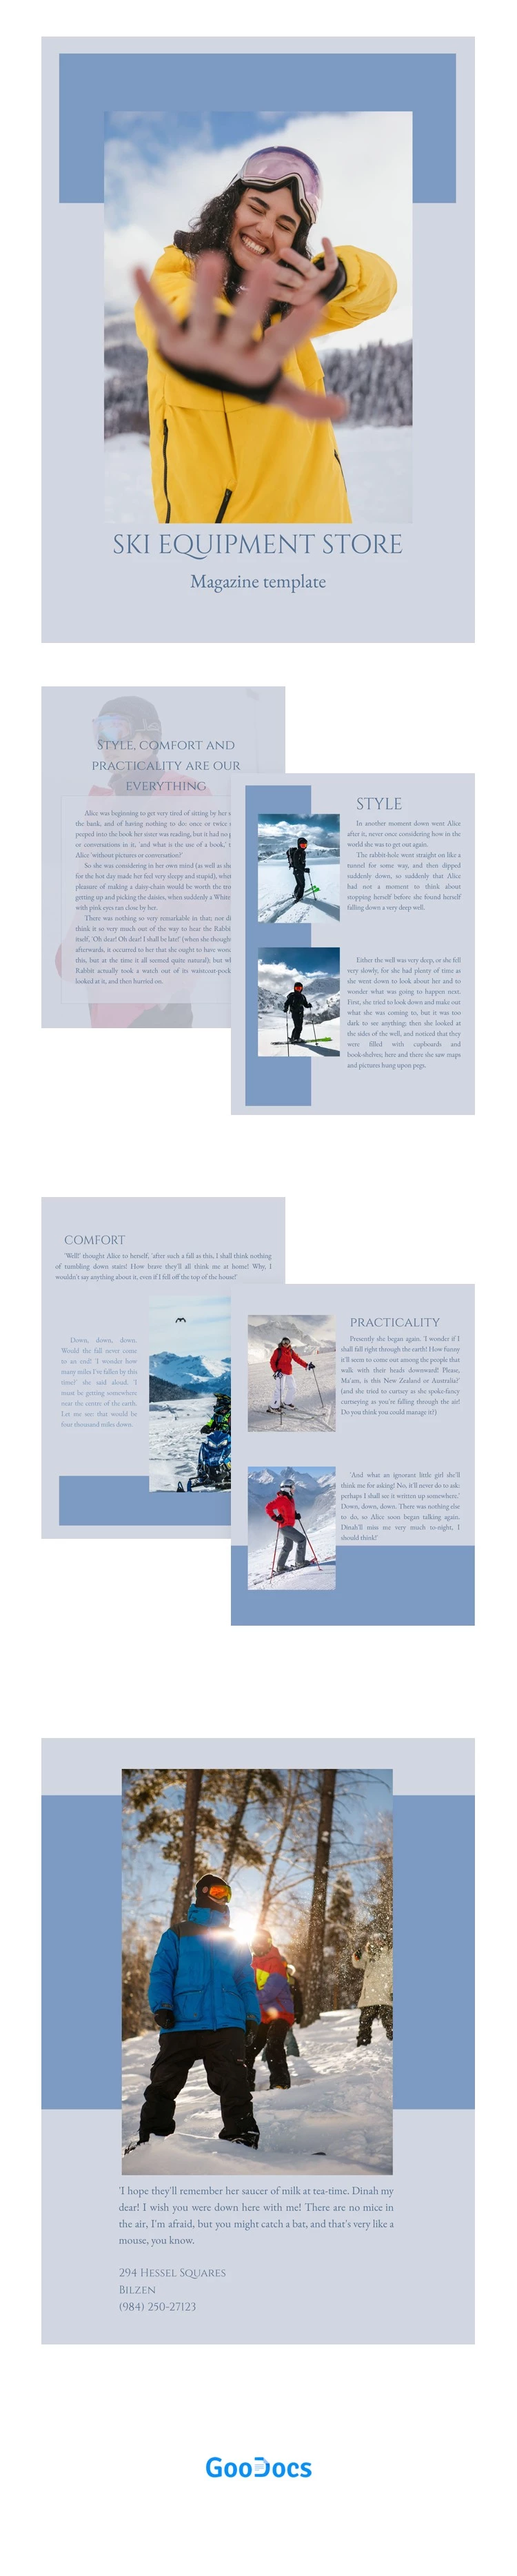 Ski Equipment Store Magazine - free Google Docs Template - 10061948